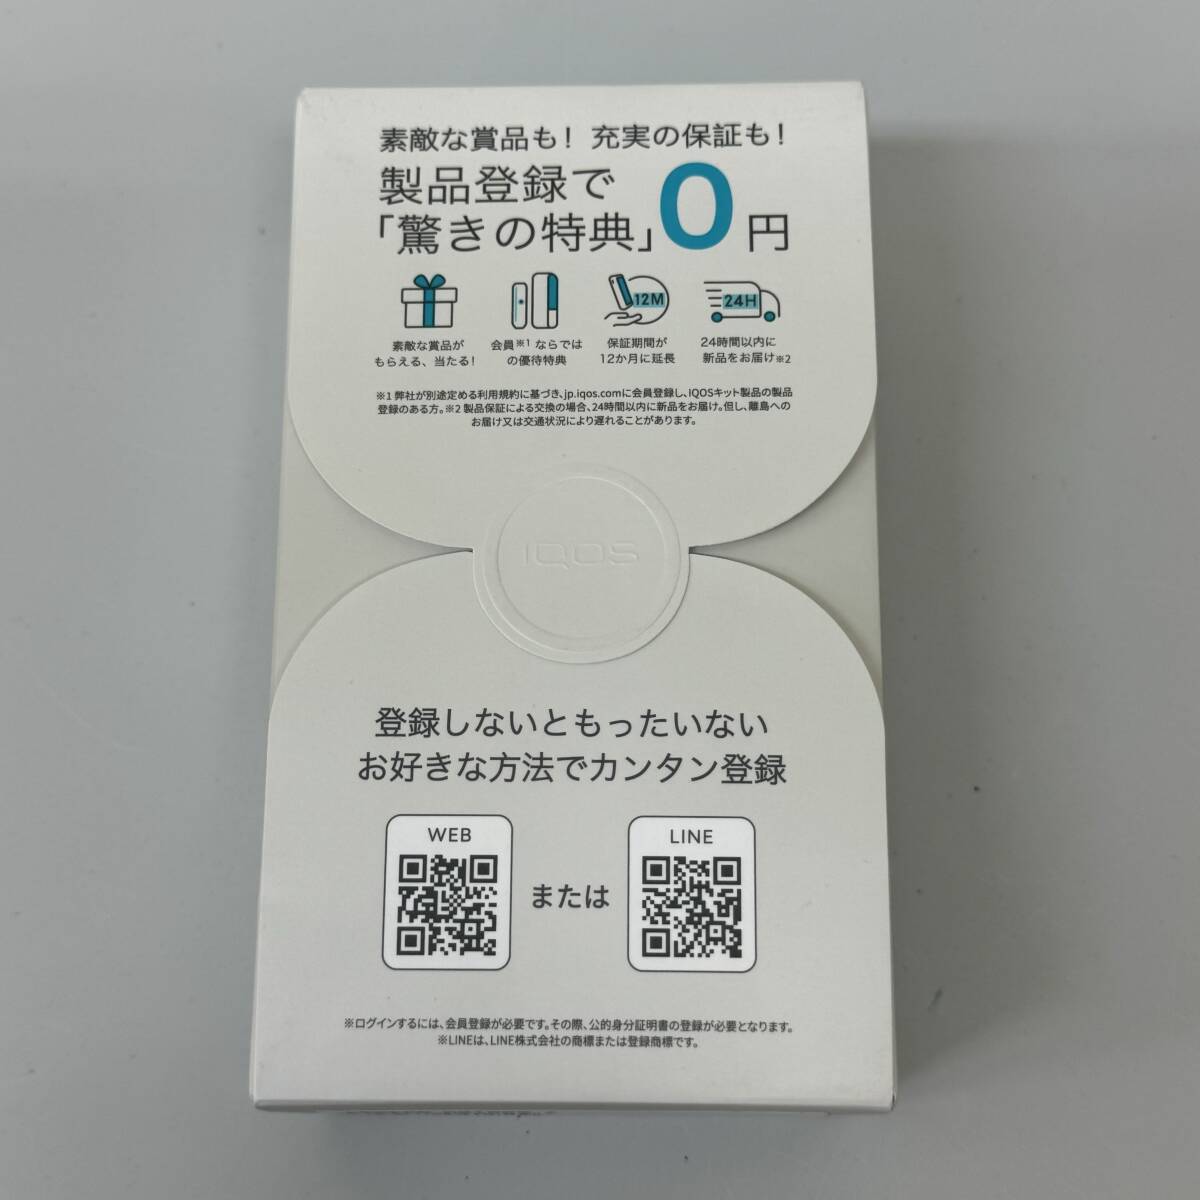 K3396 1 иен старт IQOS ILUMA i Iqos il ma I Breeze Blue нераспечатанный электронный сигареты 